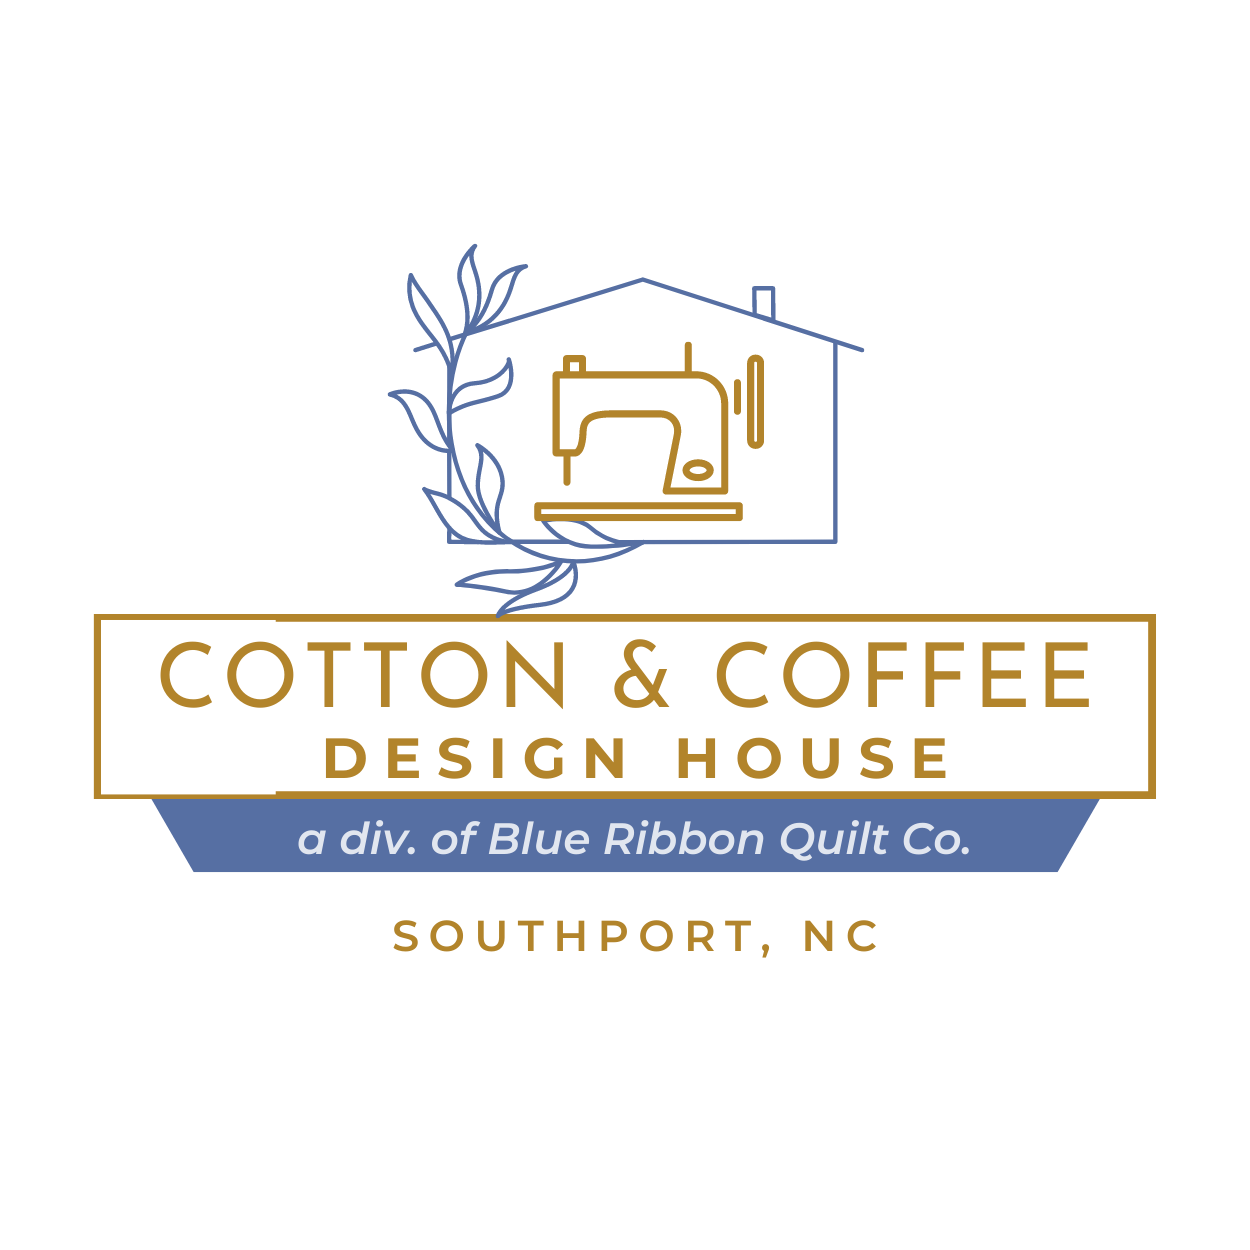 Cotton & Coffee Design House